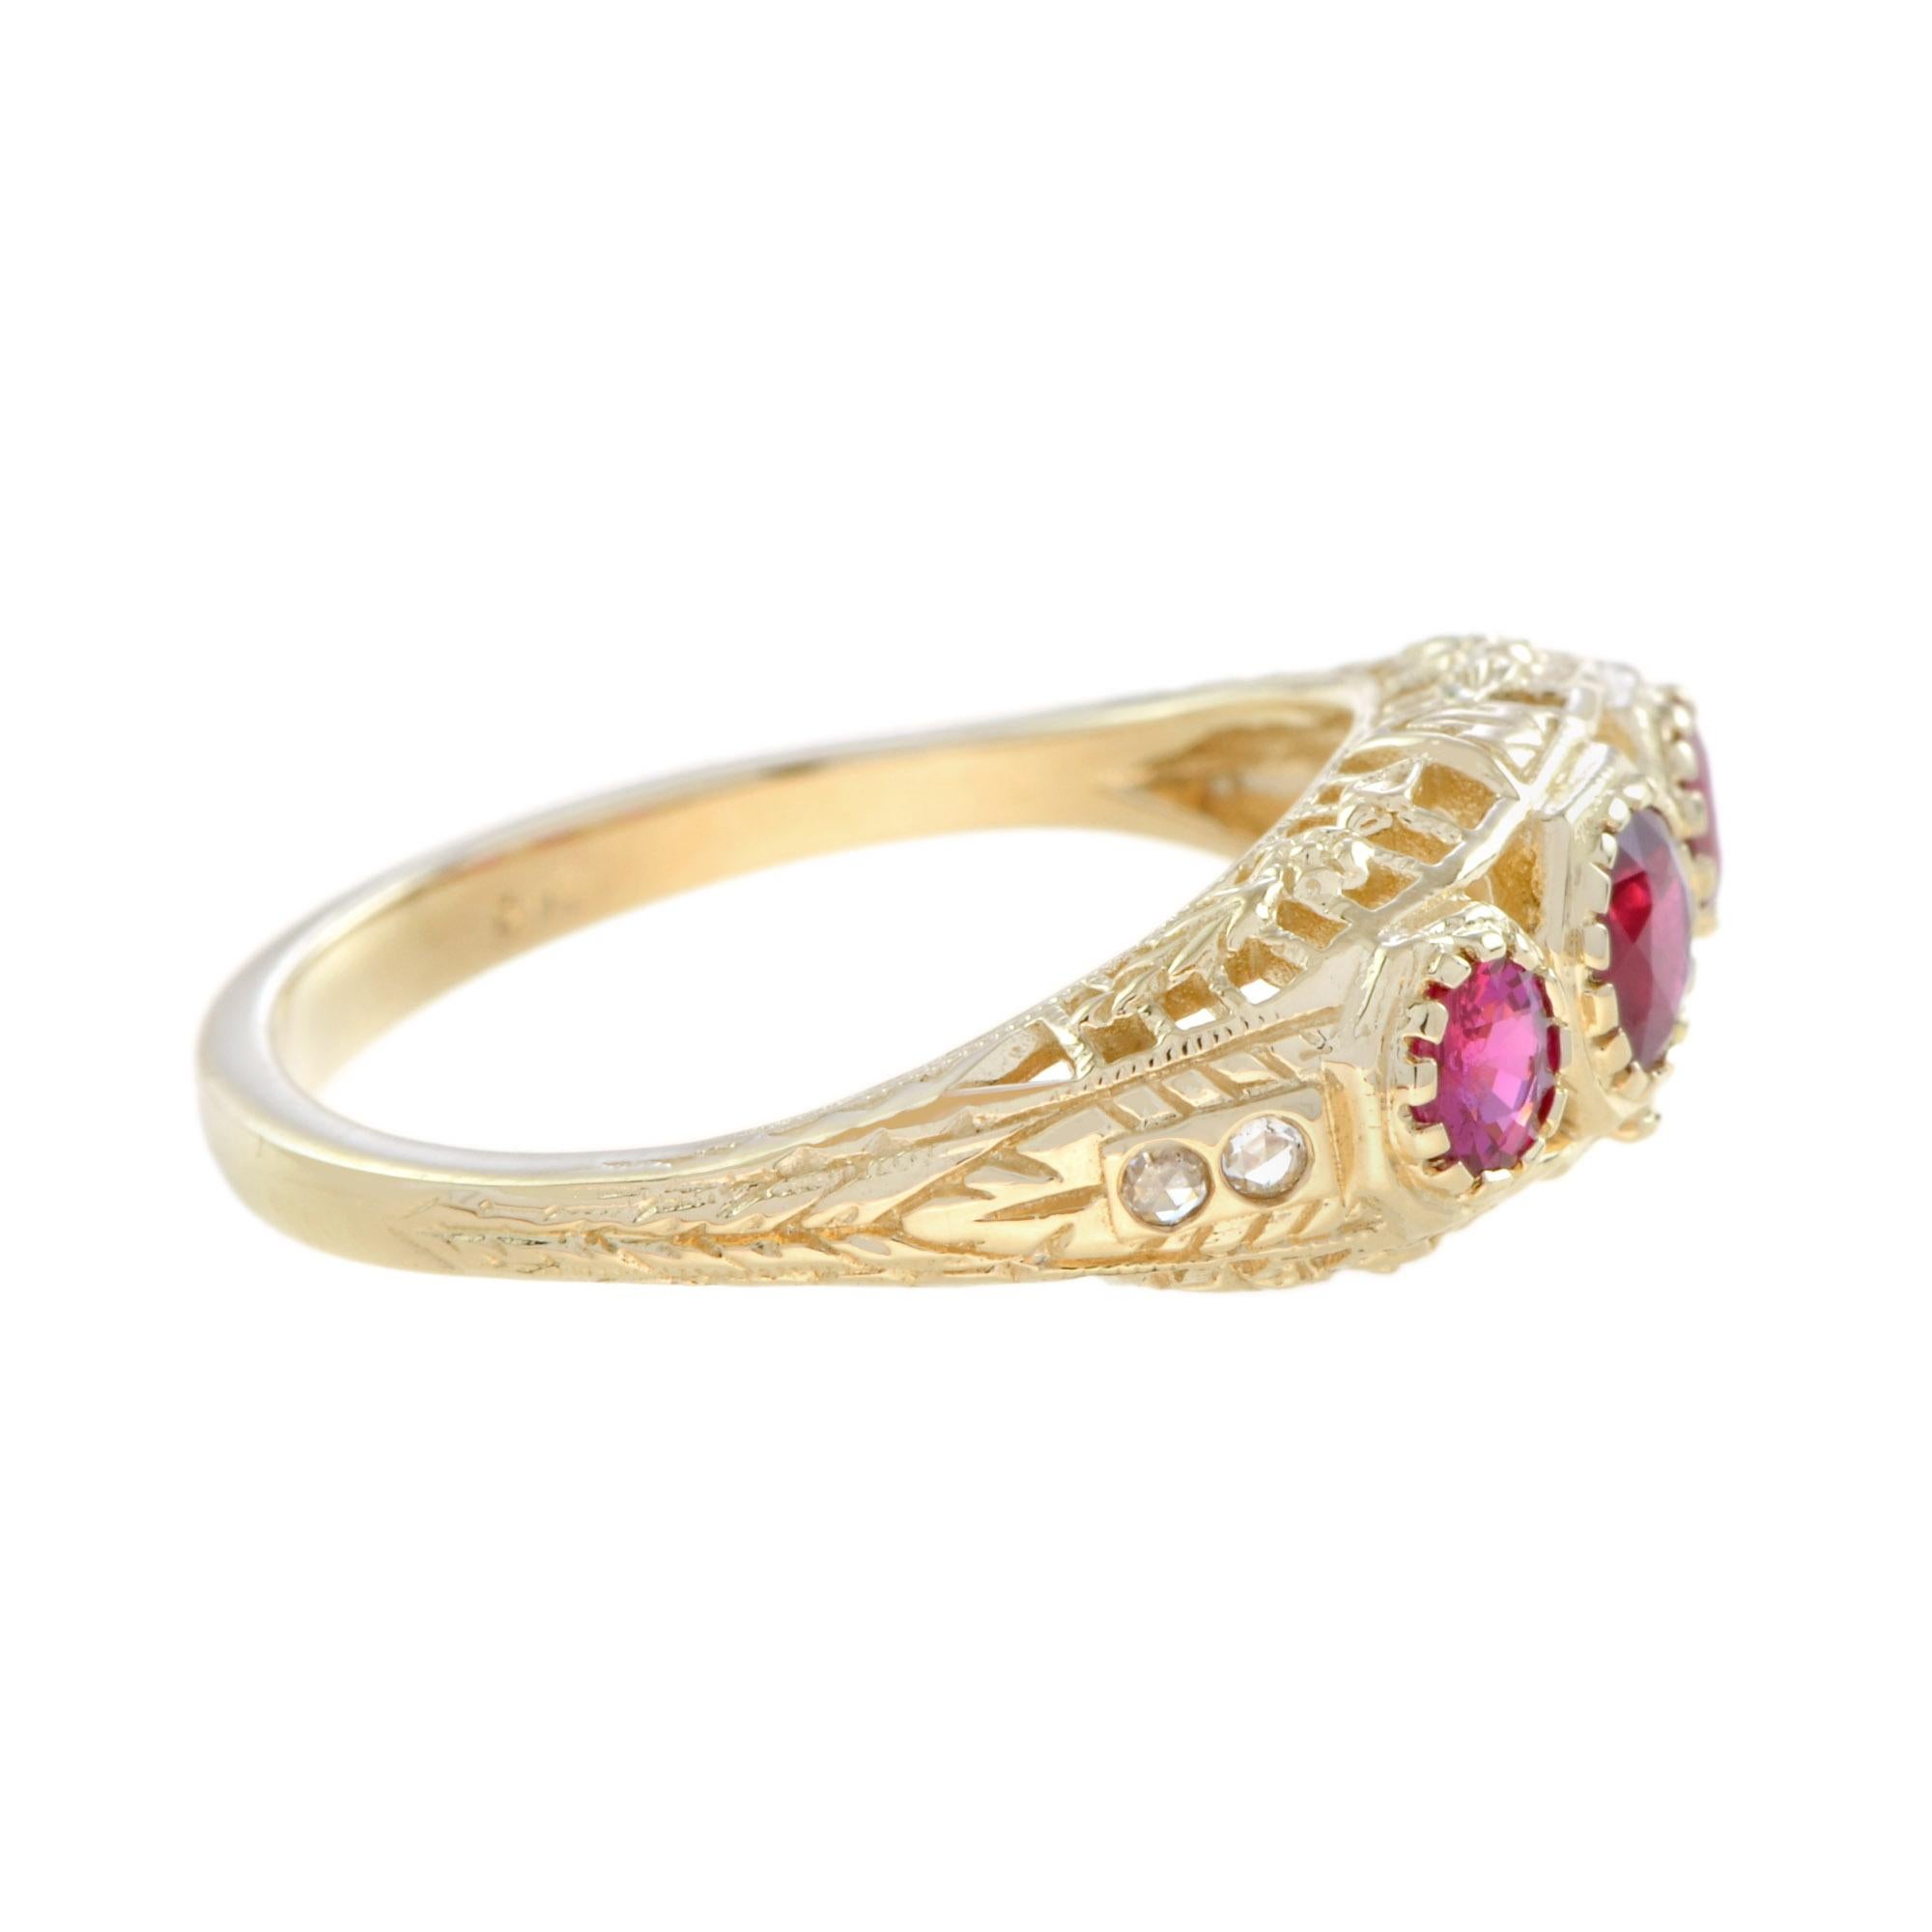 Edwardian Ruby and Diamond Three Stone Filigree Ring in 14K Yellow Gold